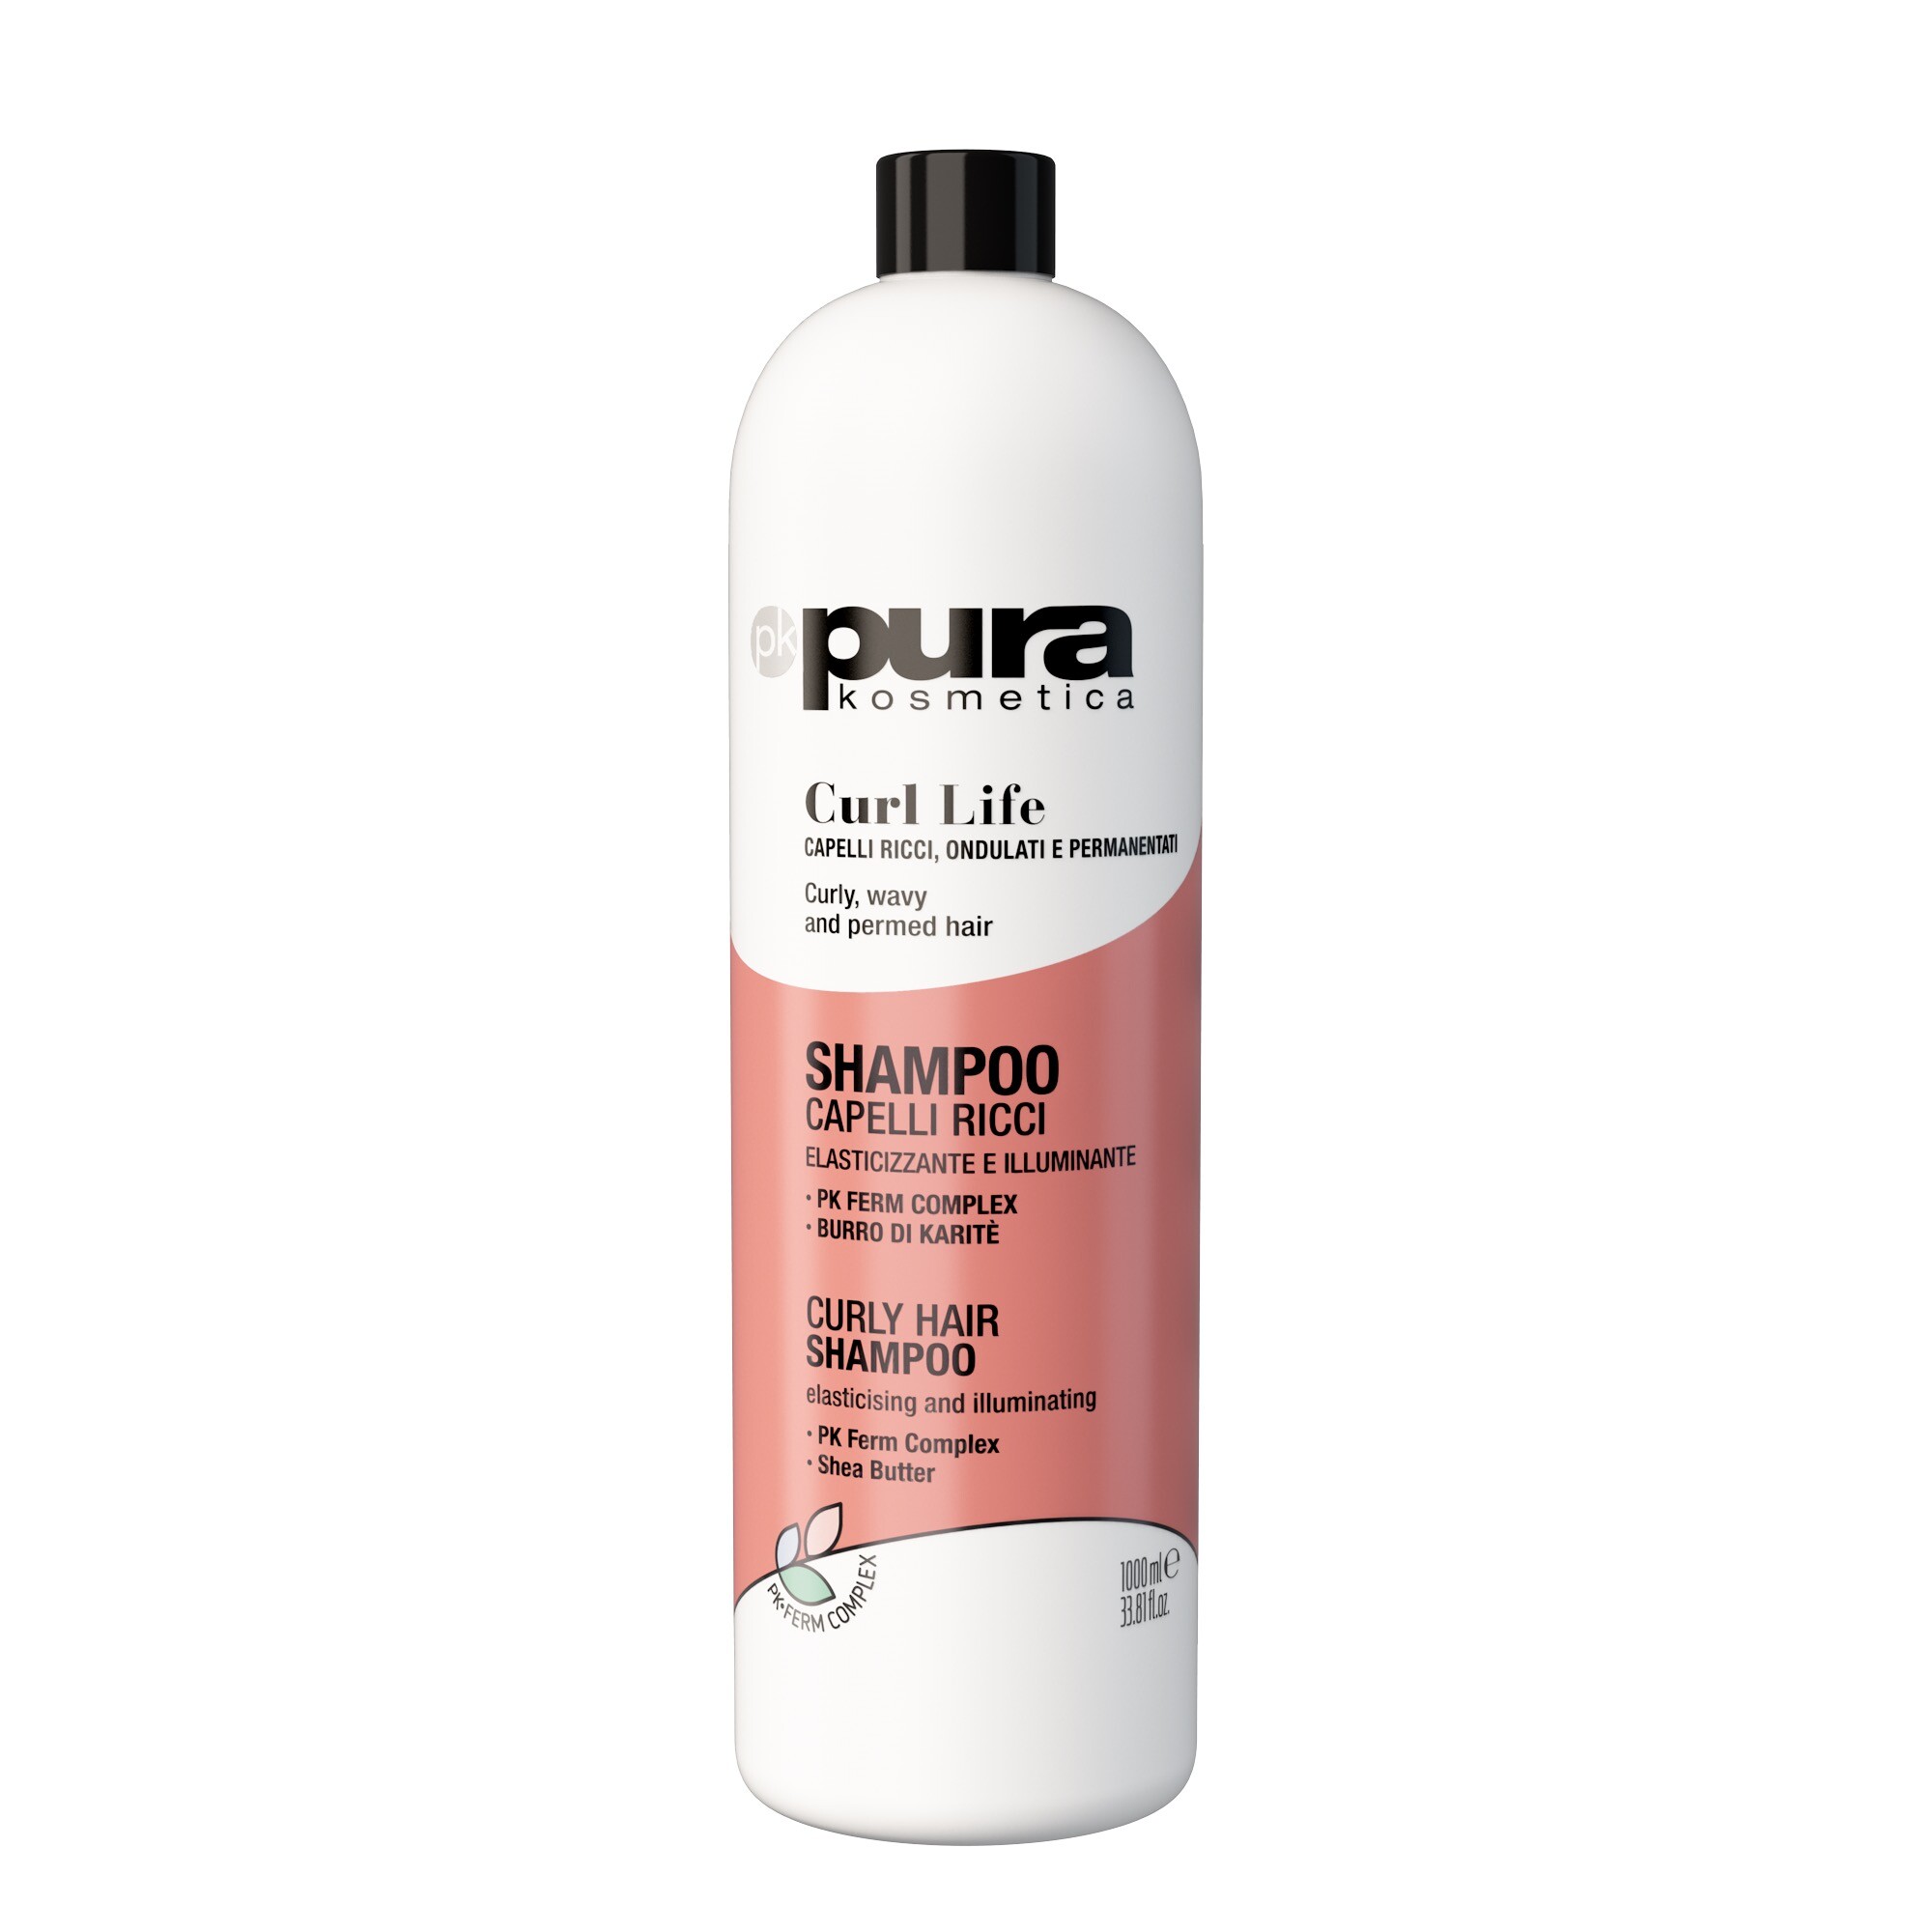 Pura Kosmetica Pure Curl Life Shampoo 1000ml